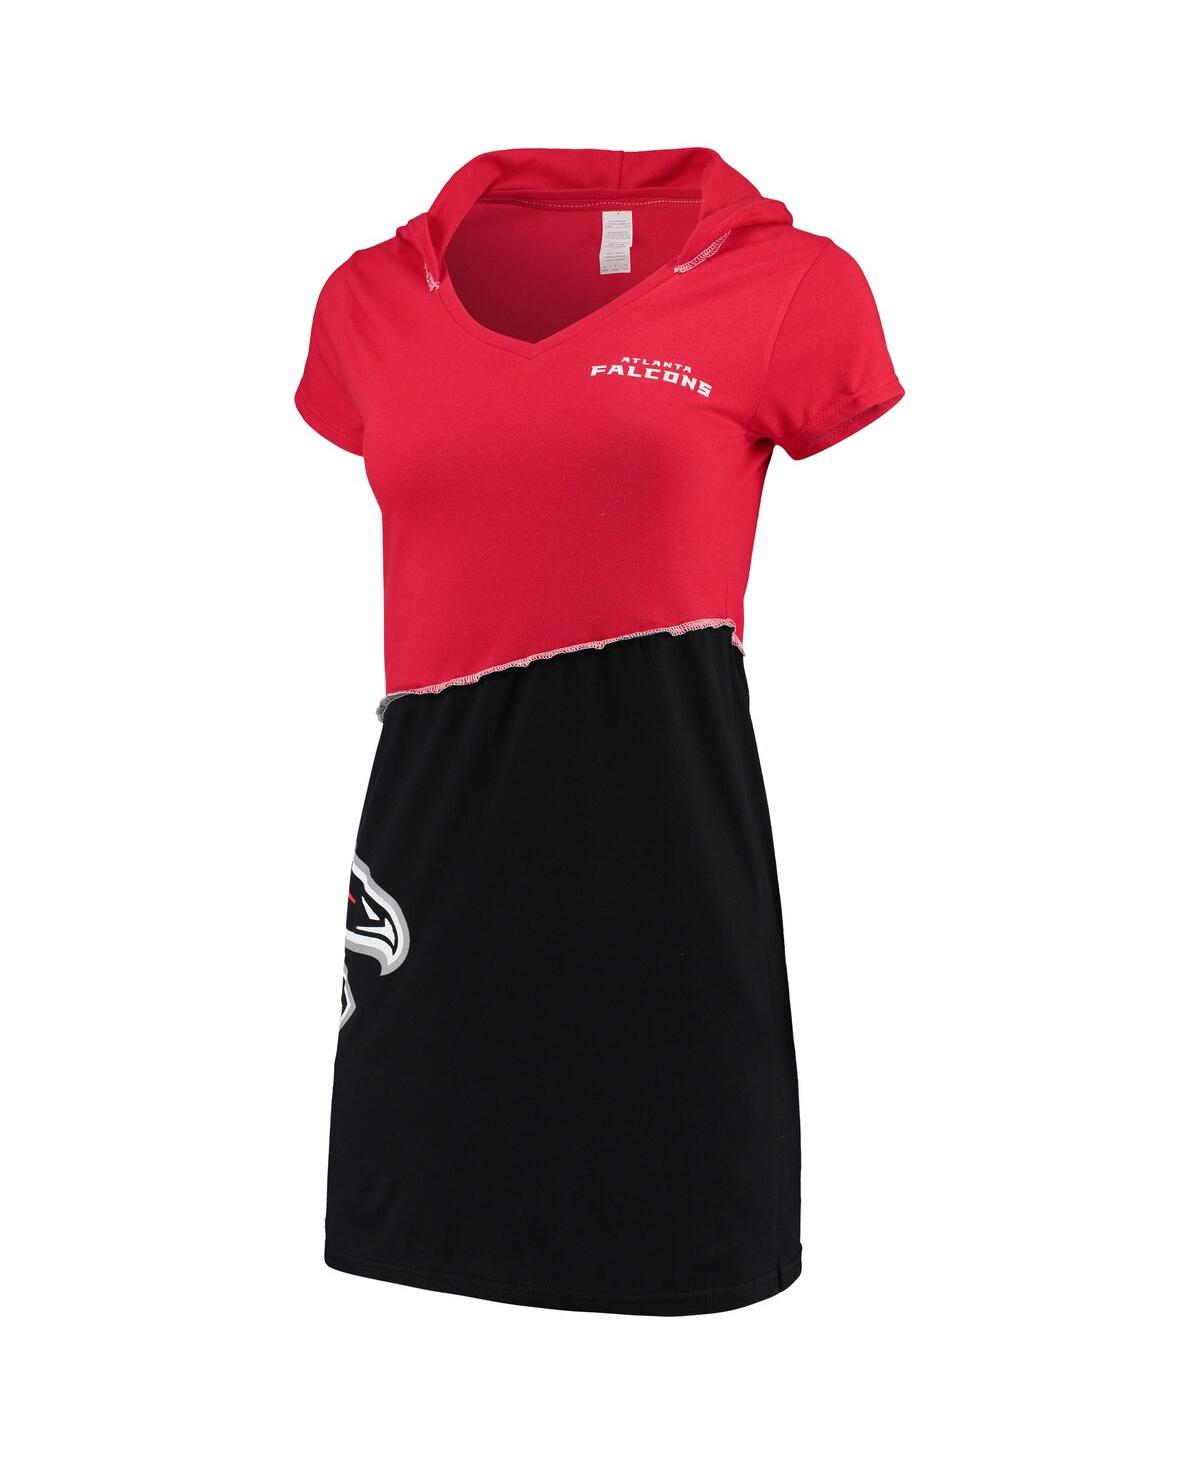 Women's Refried Apparel Red, Black Atlanta Falcons Hooded Mini Dress - Red, Black